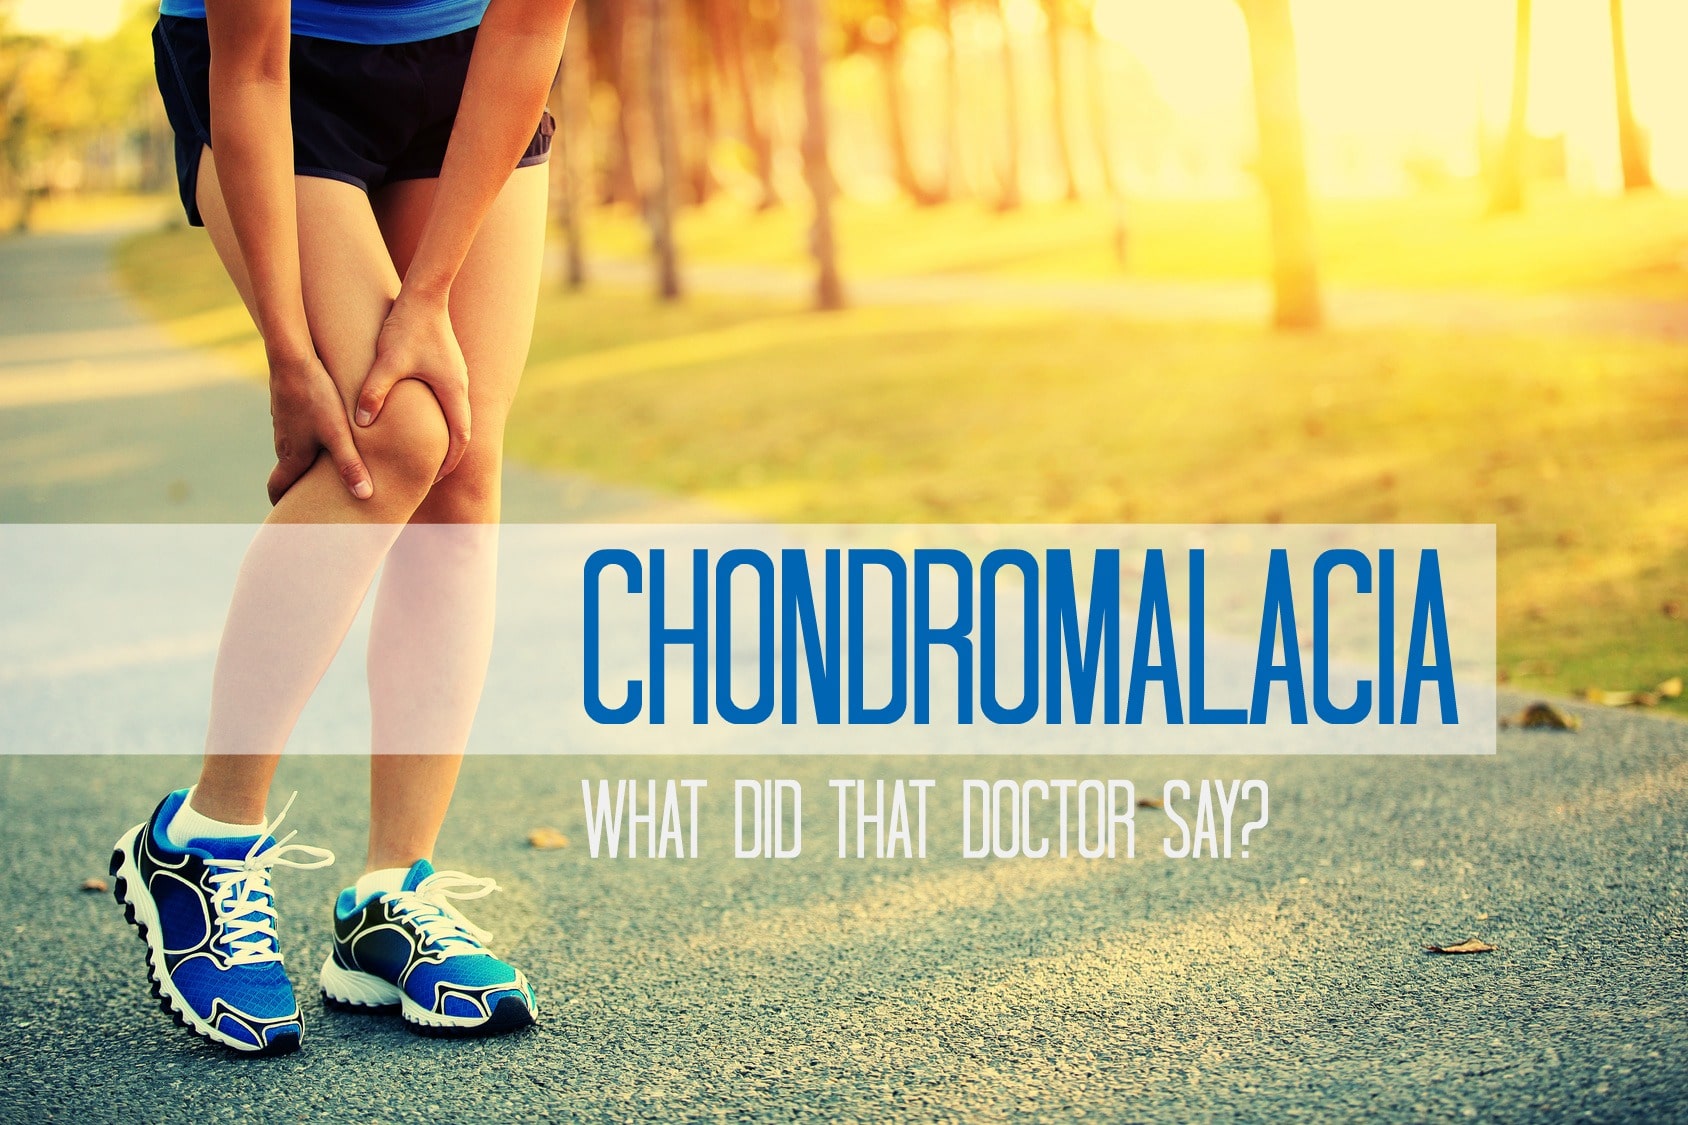 chondromalacia knee pain therapy